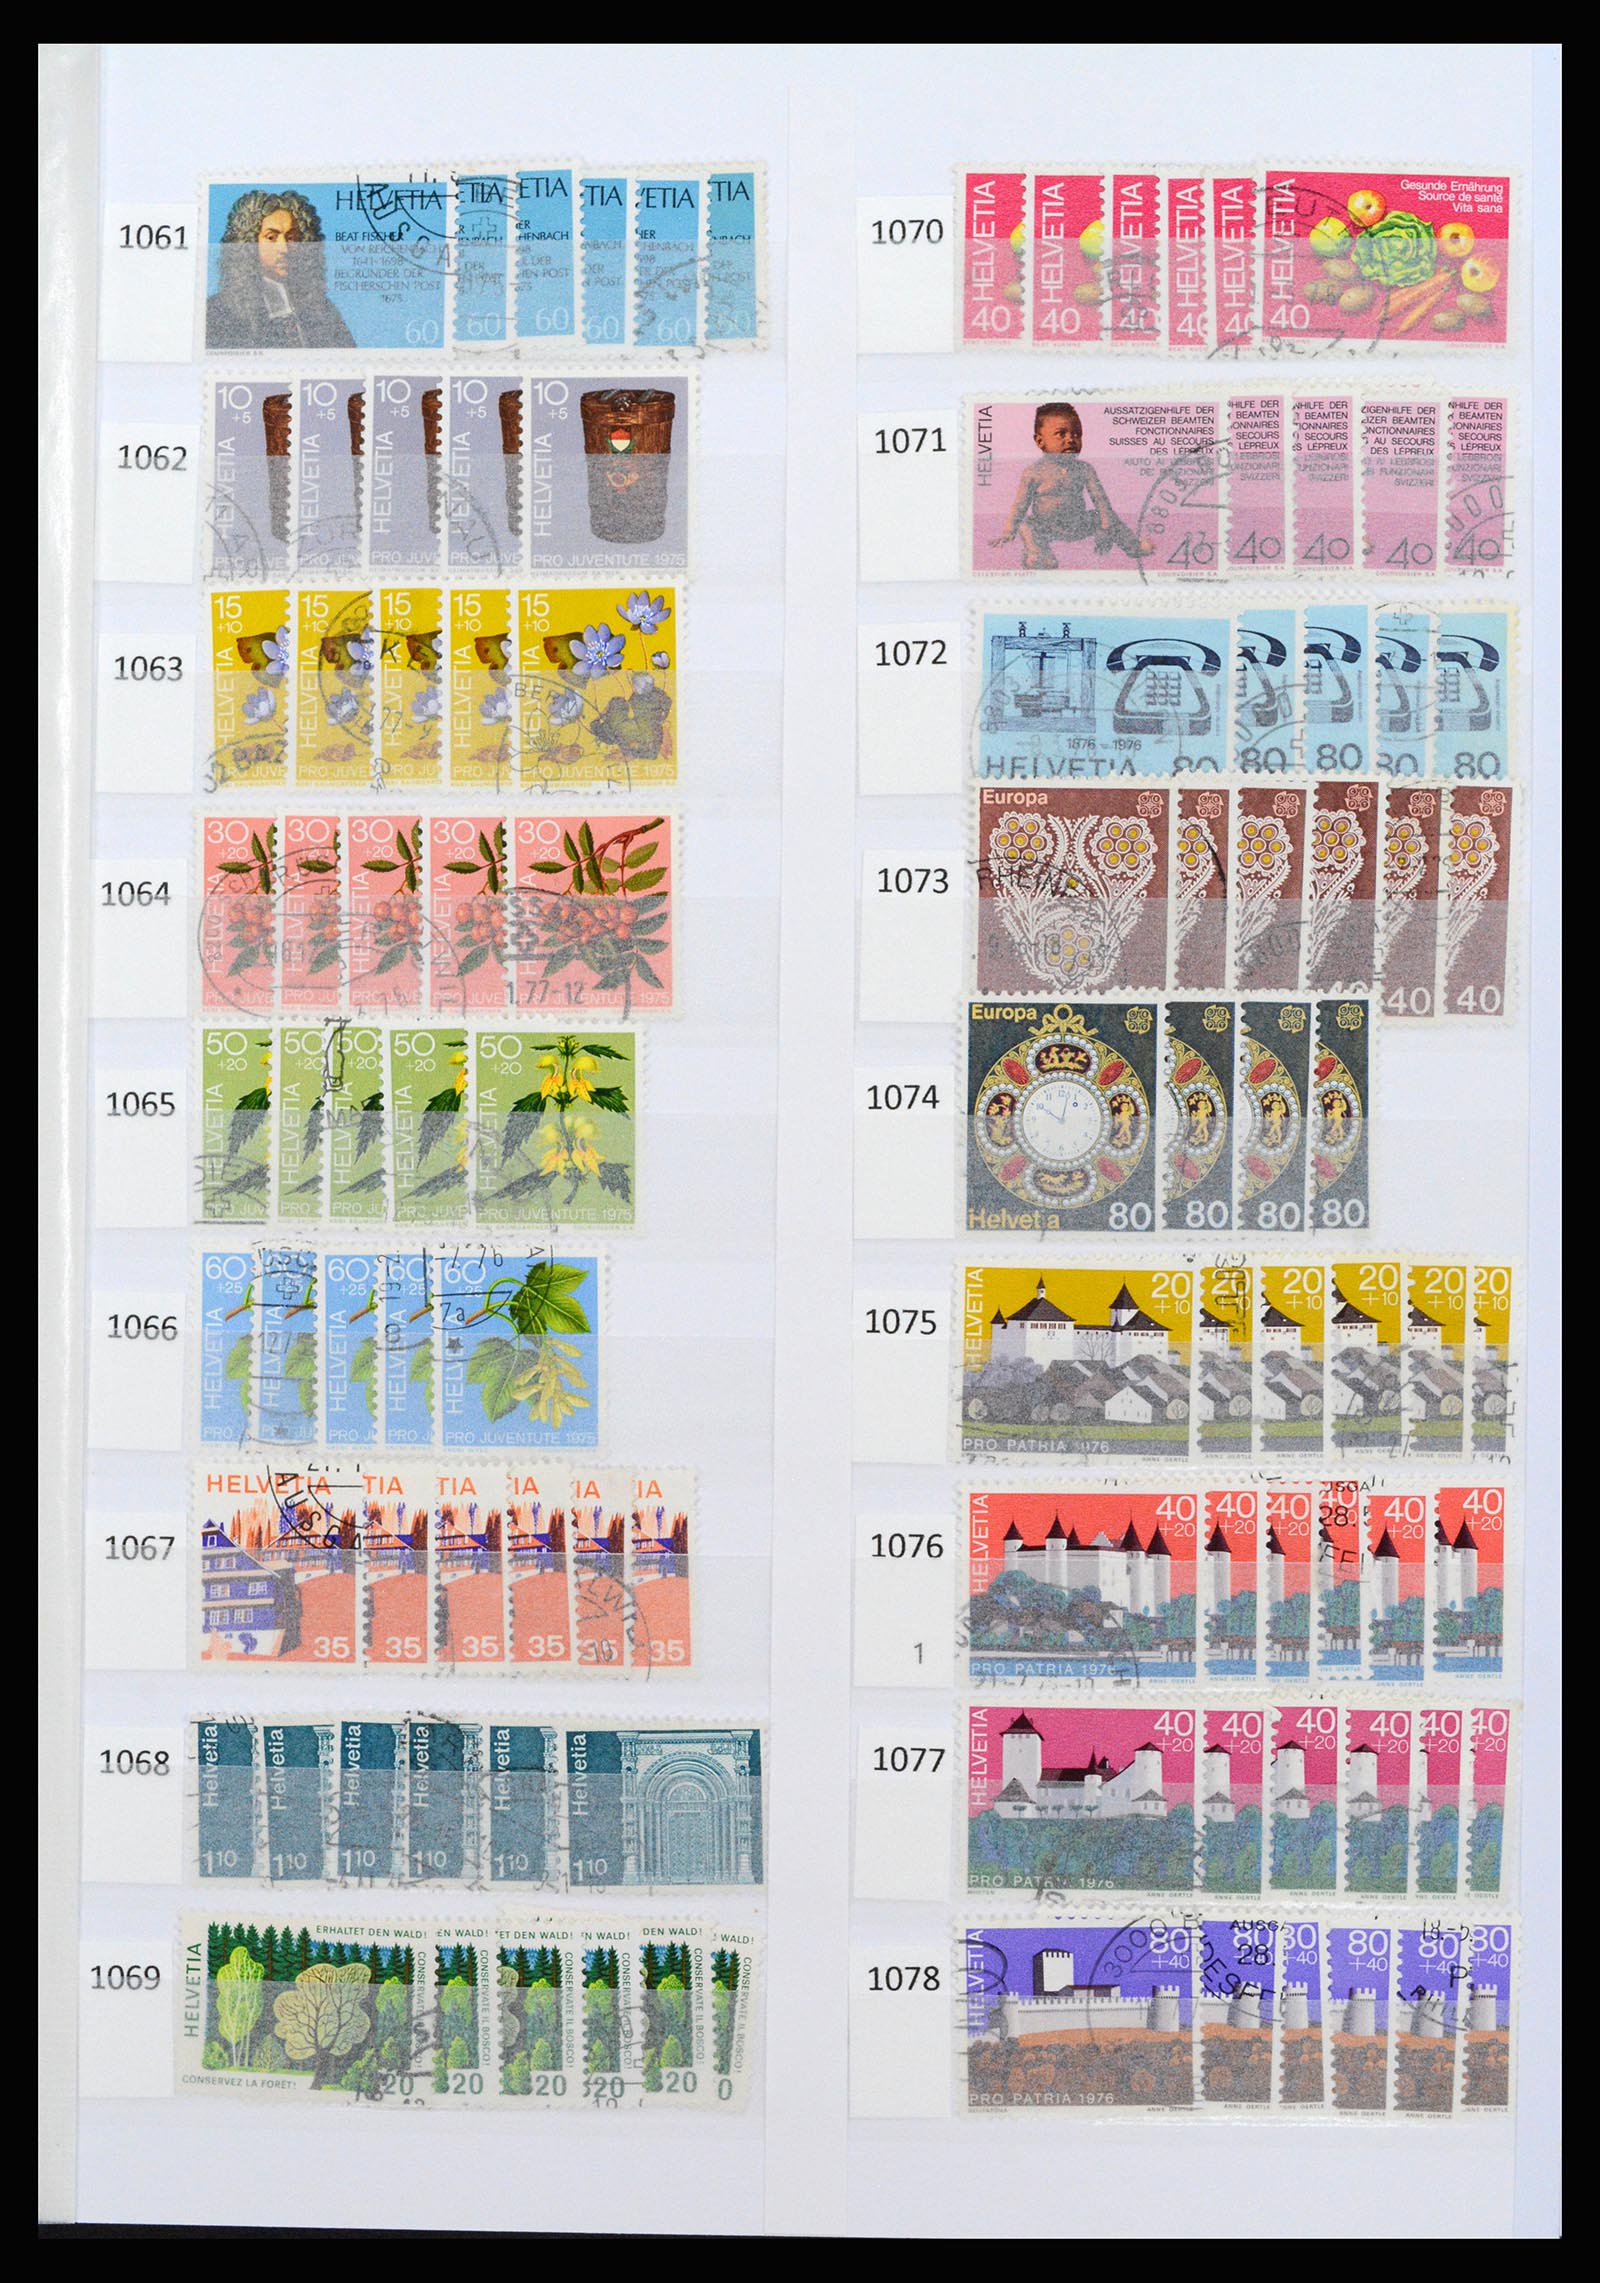 37252 060 - Stamp collection 37252 Switzerland 1900-2011.